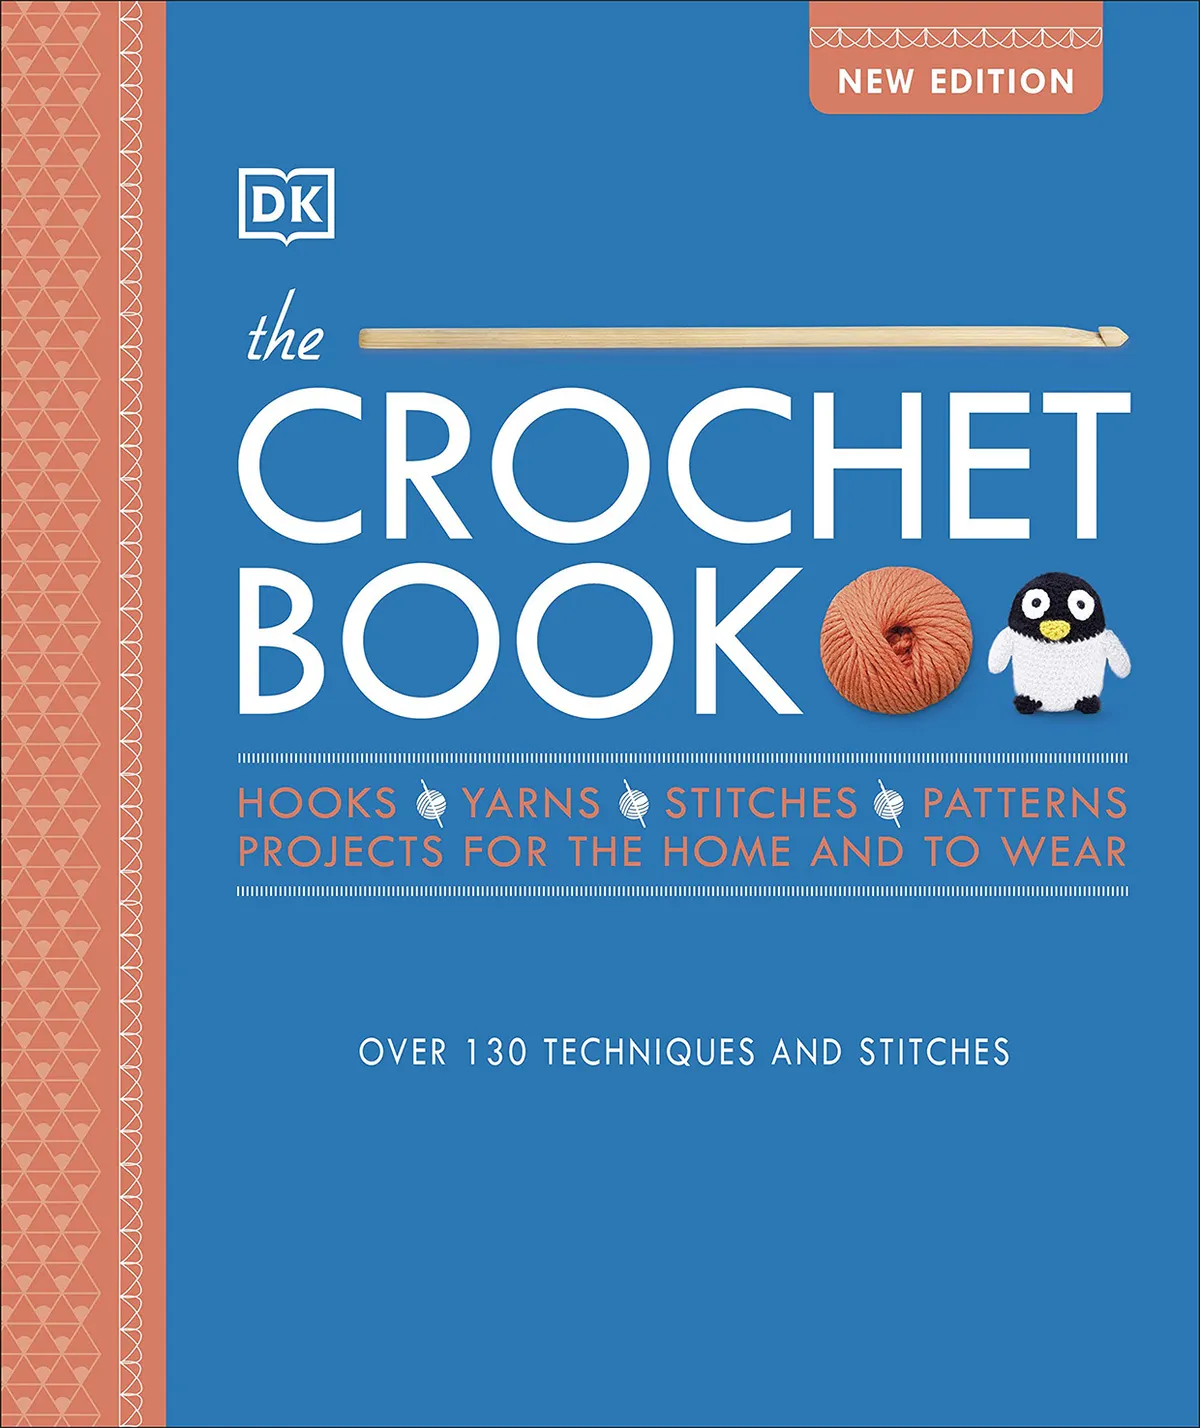 20 Best Crocheting Books for Beginners - BookAuthority